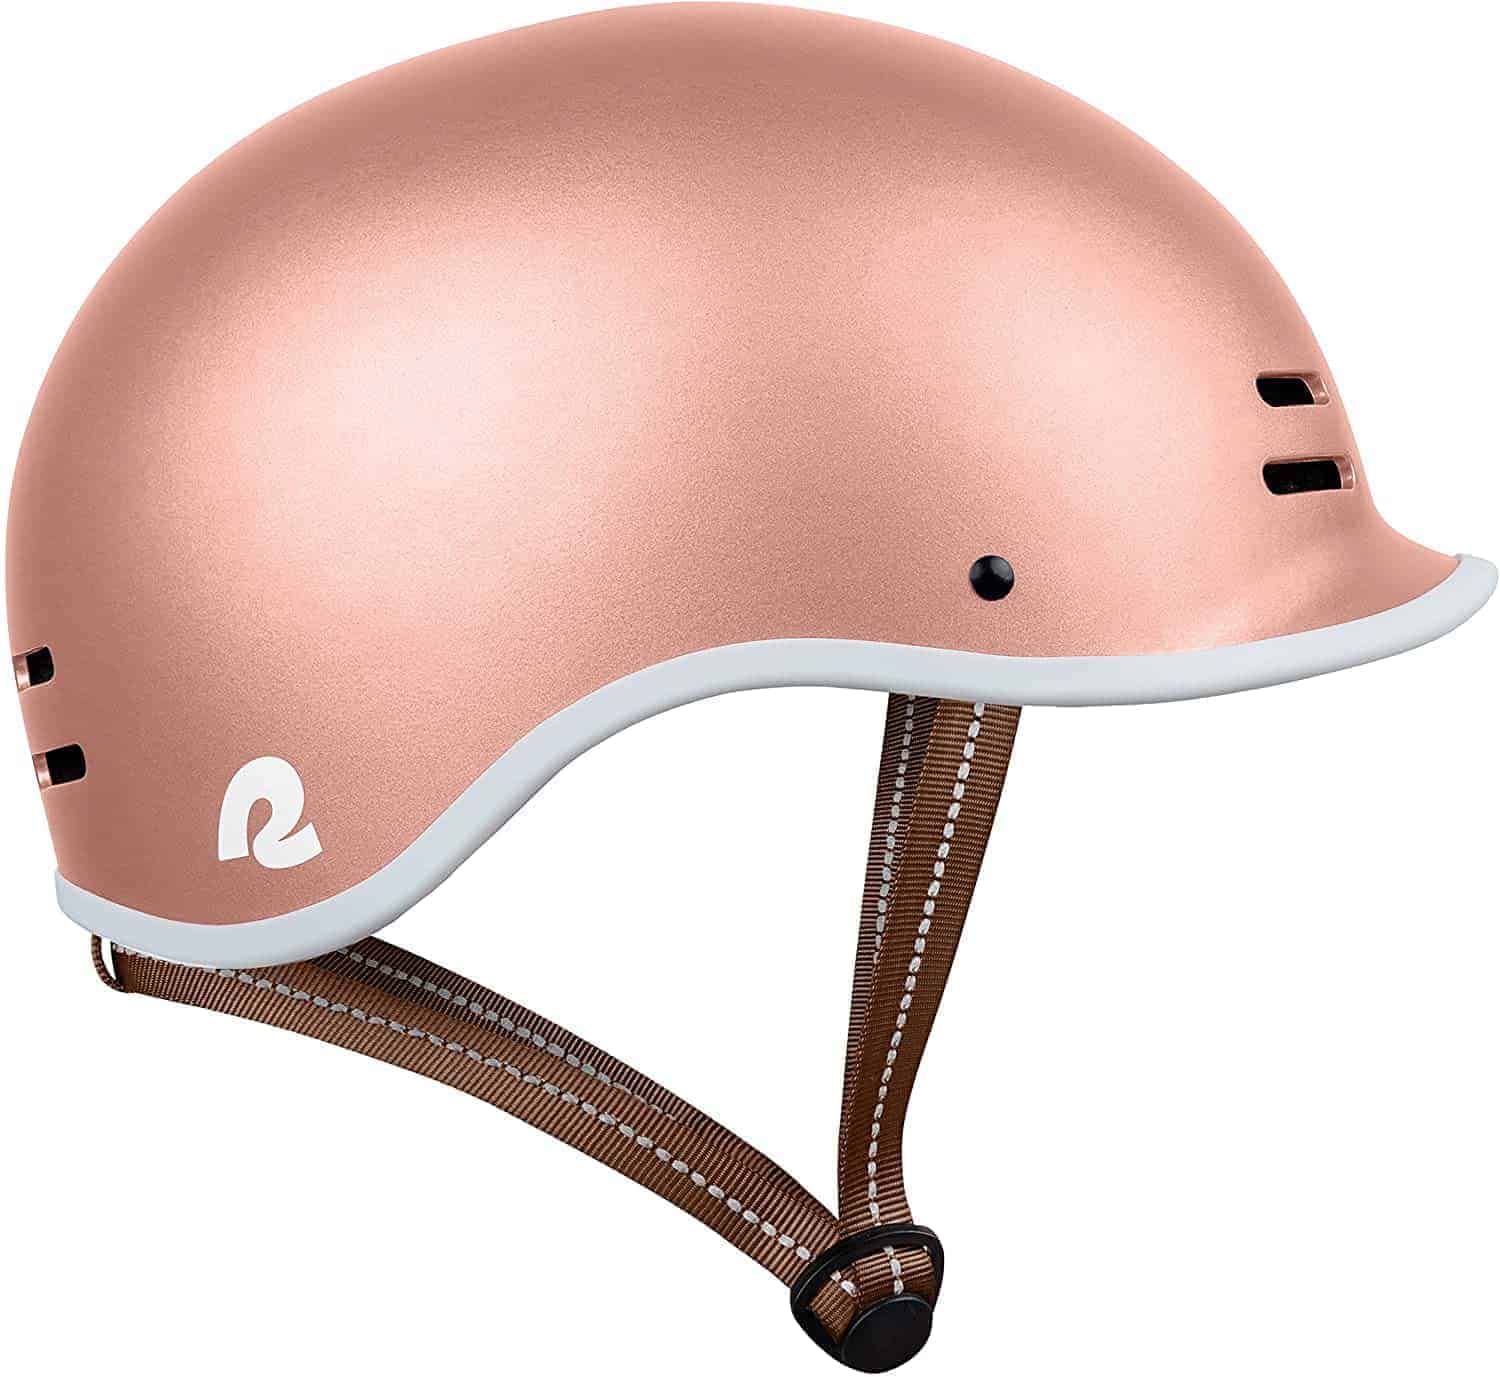 aventura-x-rose gold-helmet-retro-style